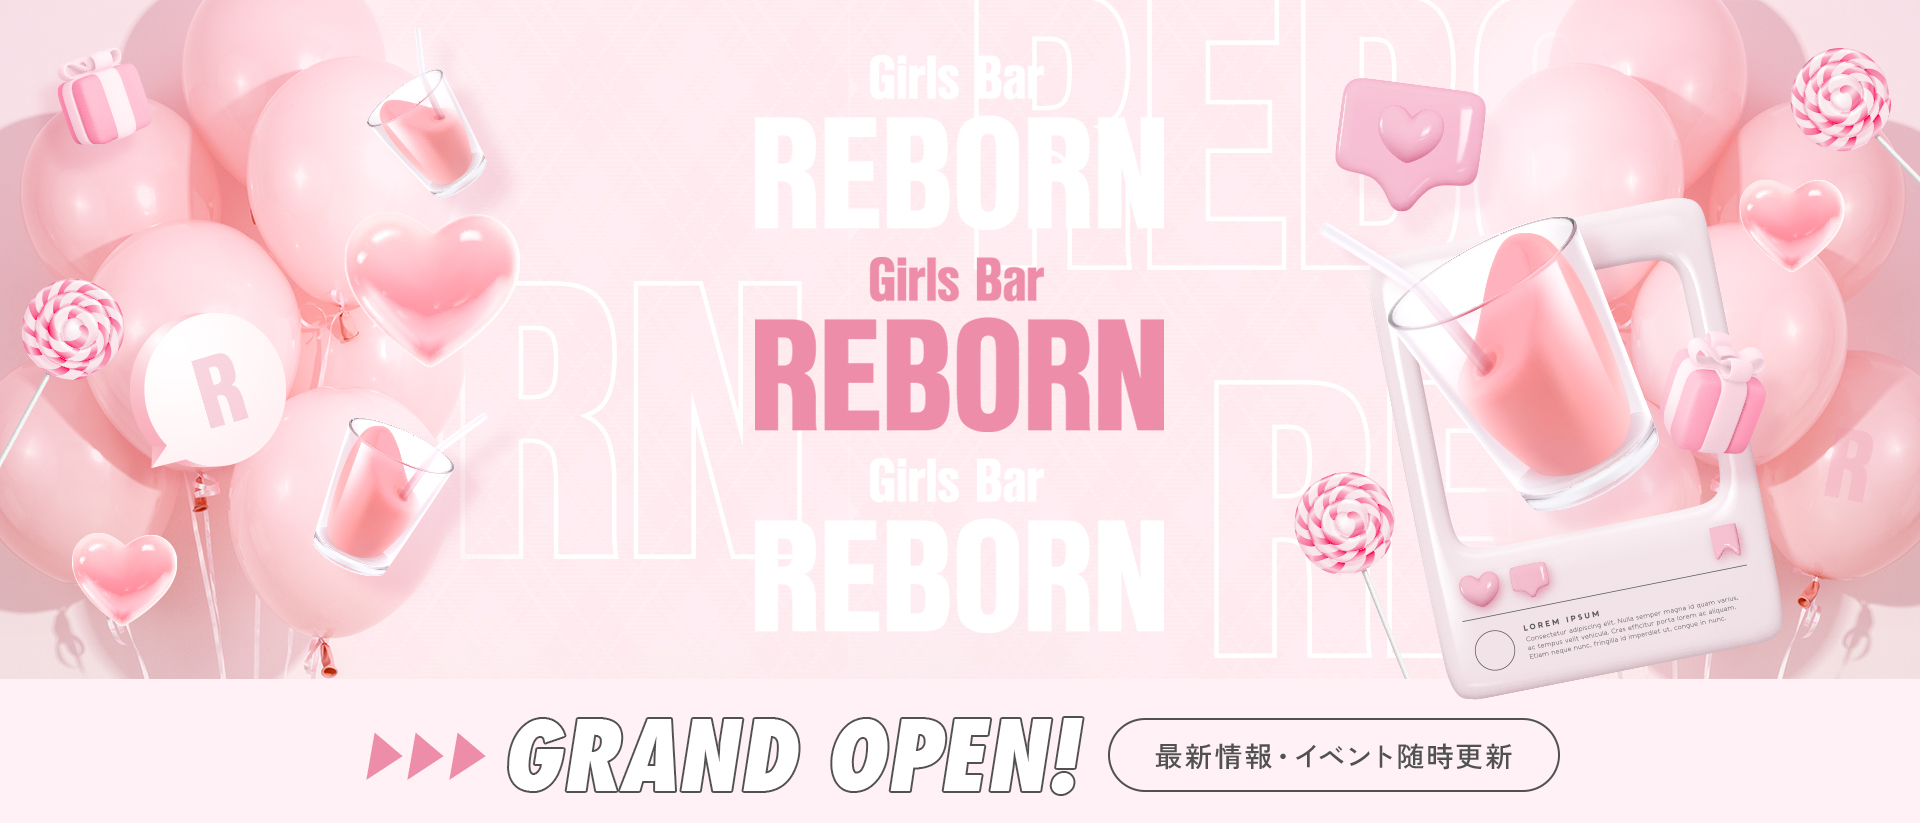 Girls Bar REBORN(リボーン)